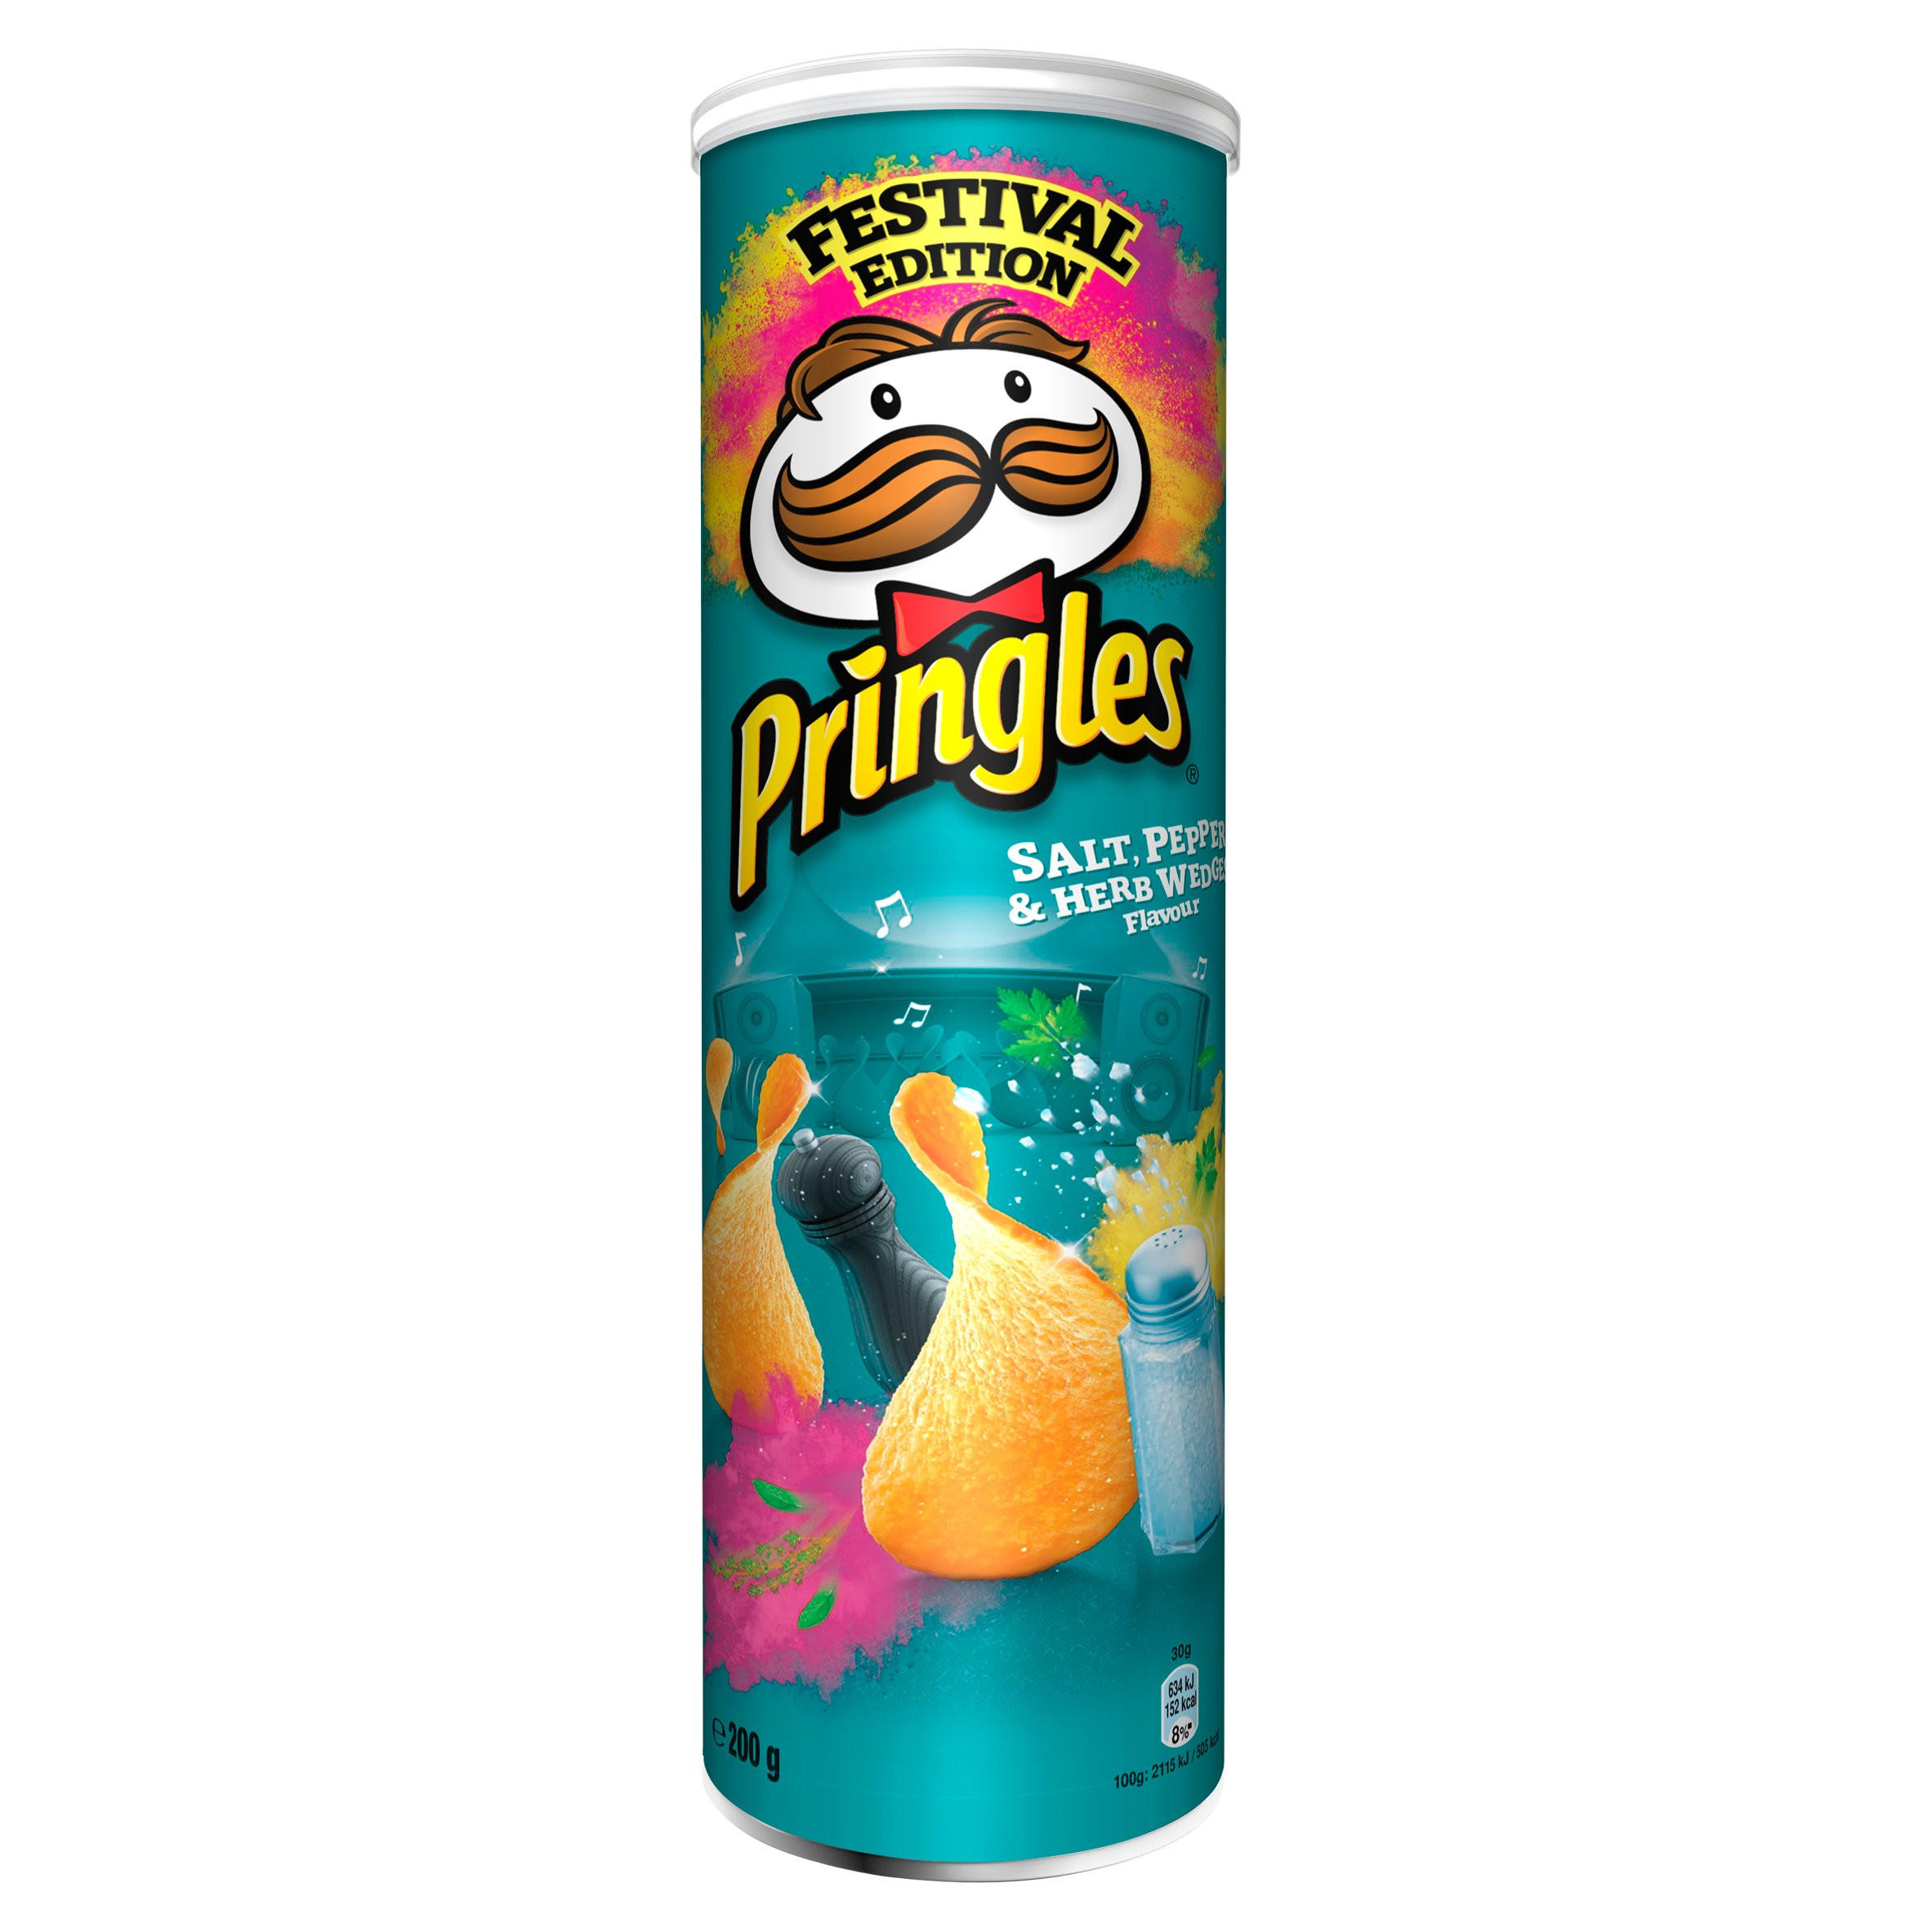 Принглс цена. Чипсы принглс. Pringles чипсы вкусы. Чипсы Pringles Salt & Vinegar 165гр. Принглс 2021.